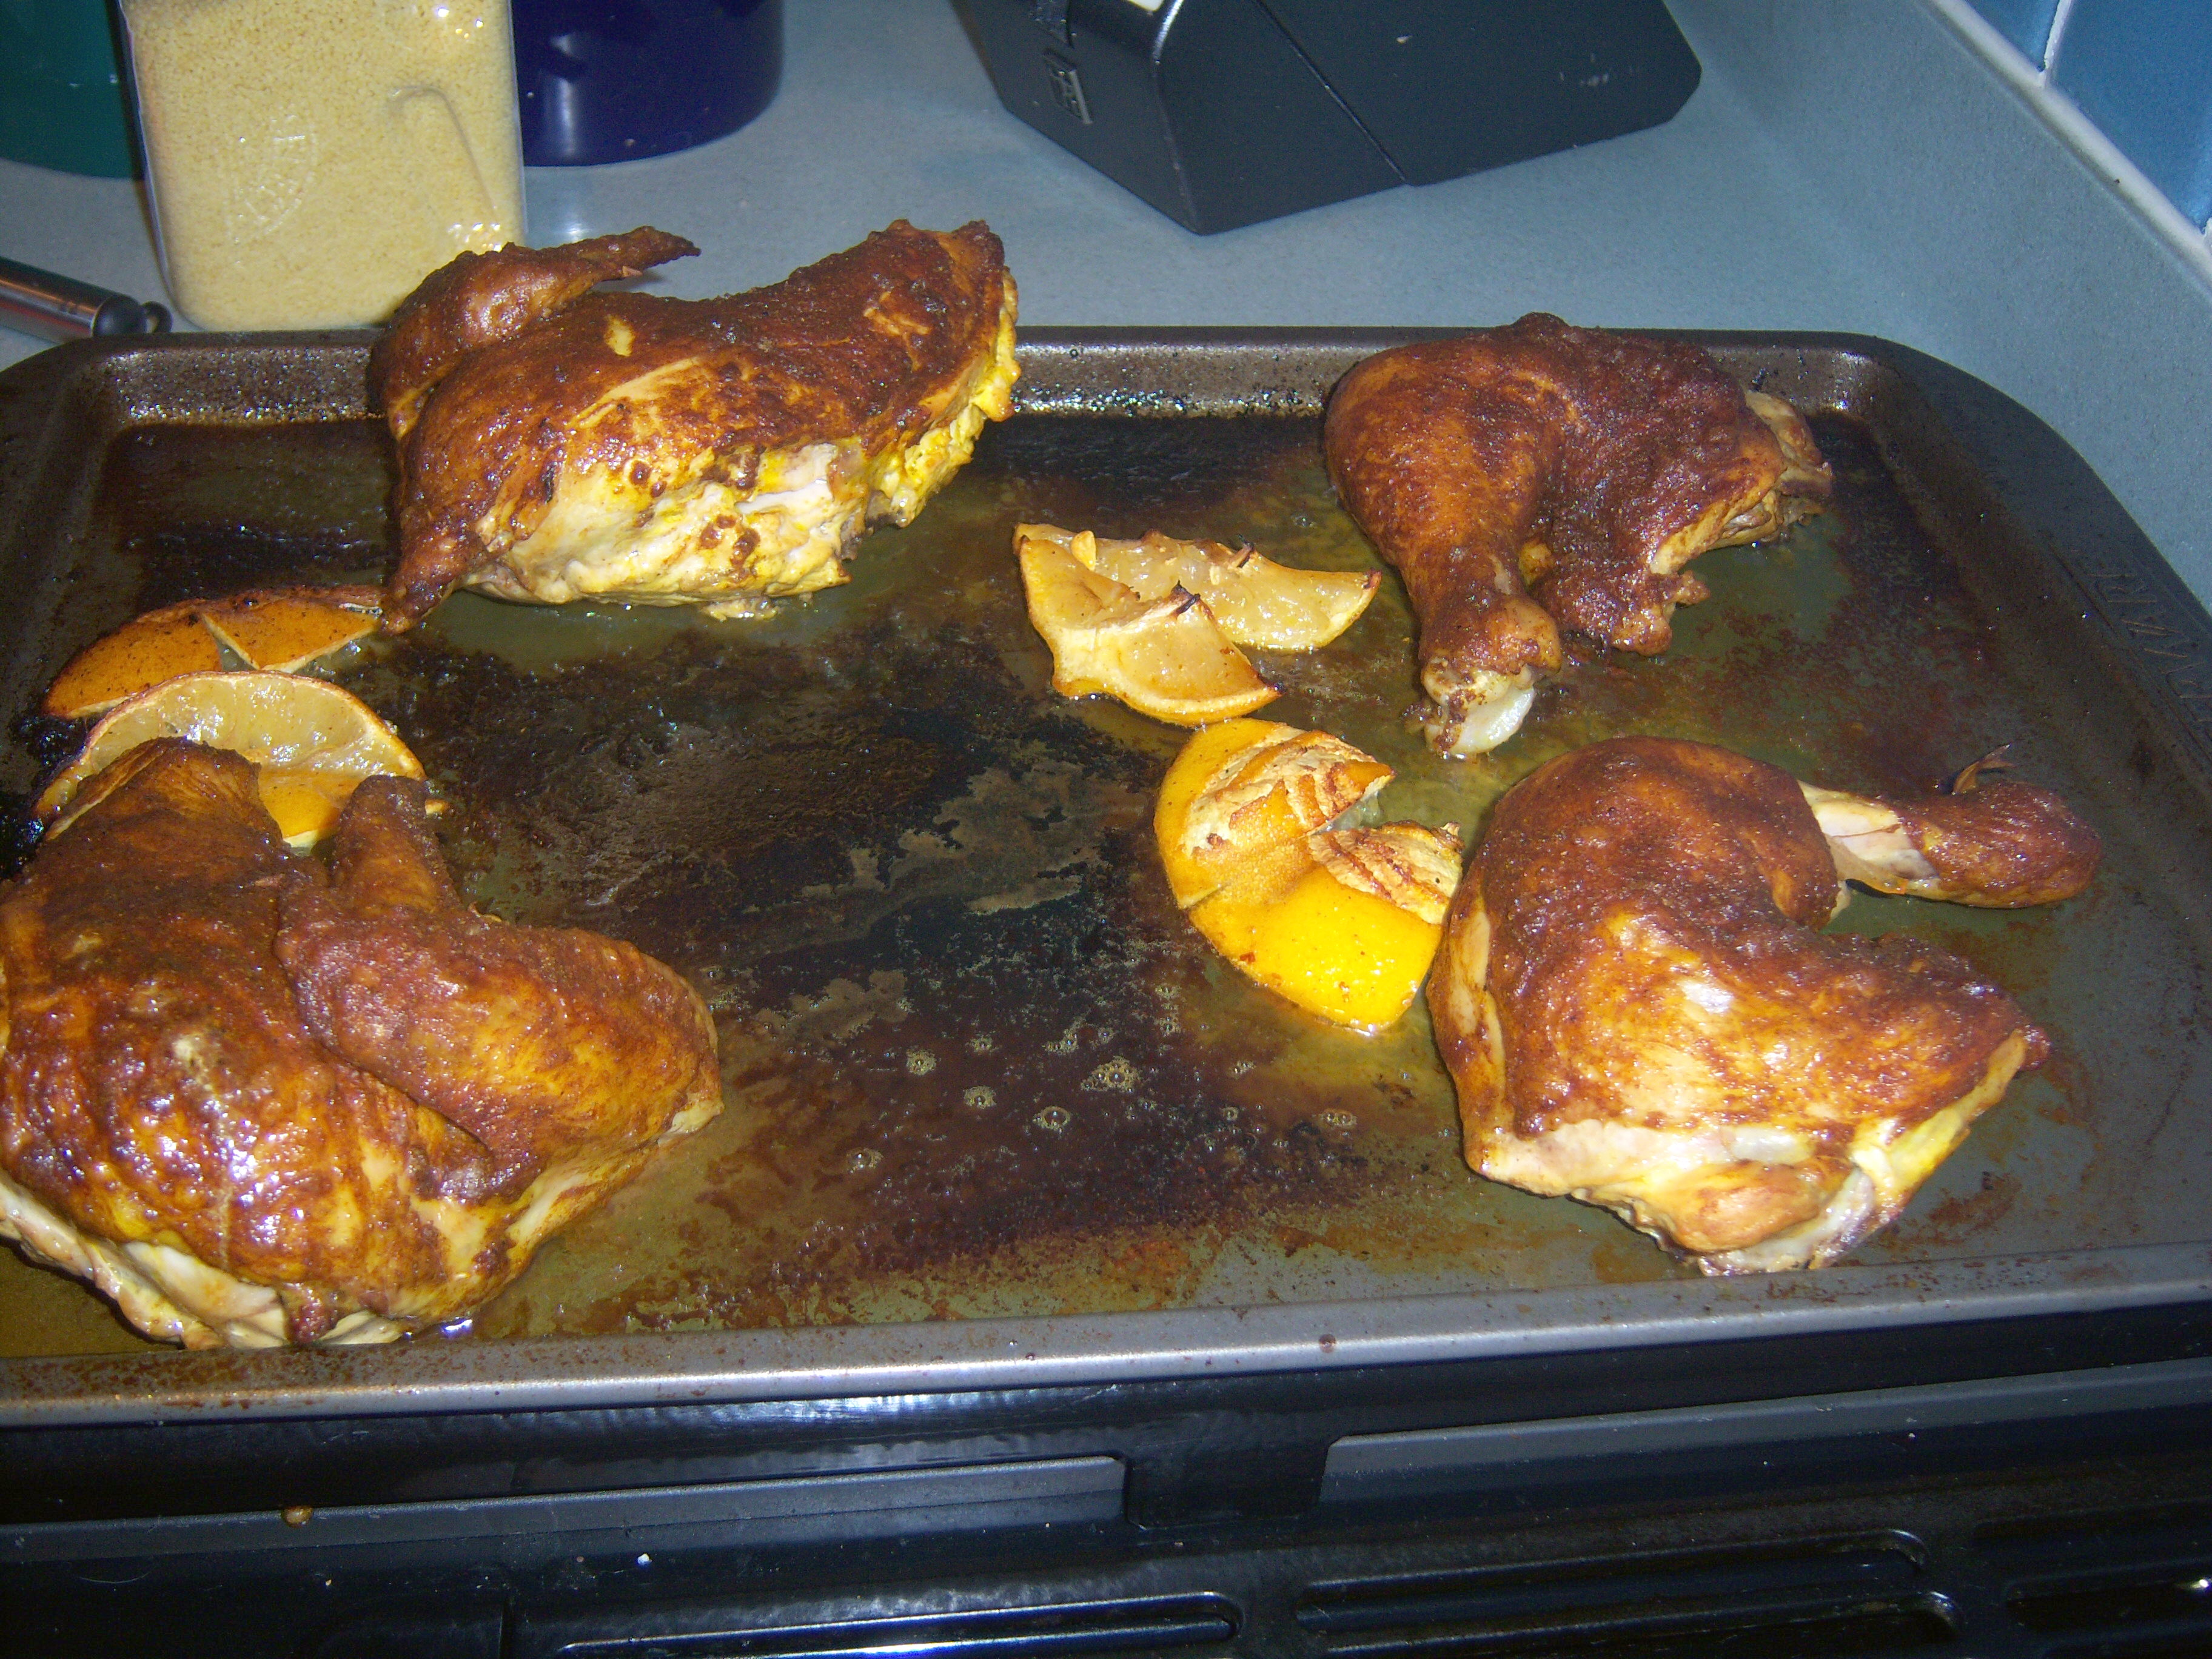 Moroccan Chicken